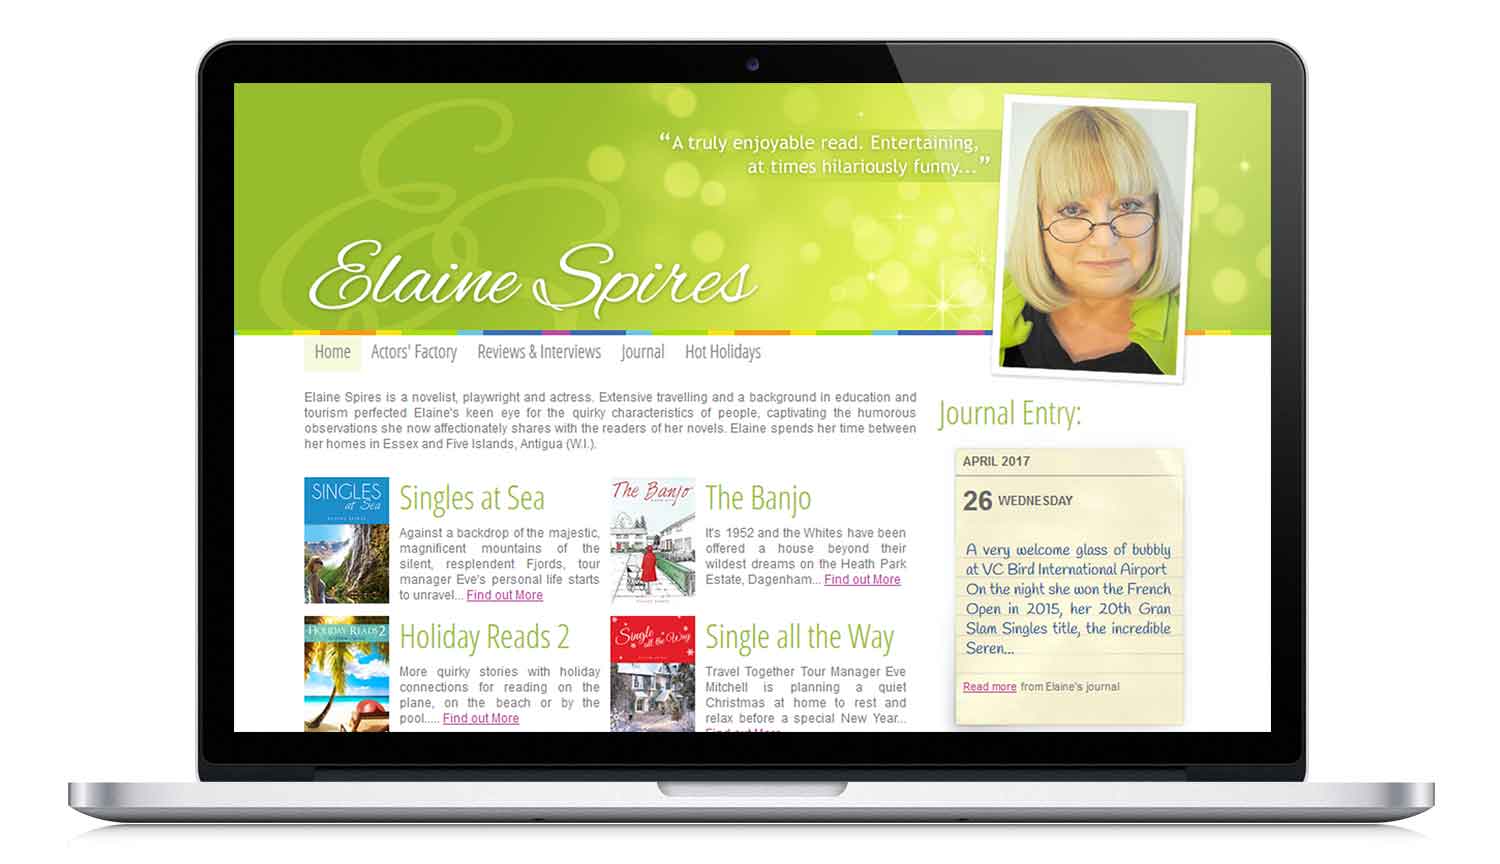 Elaine Spires website: www.elainespires.co.uk